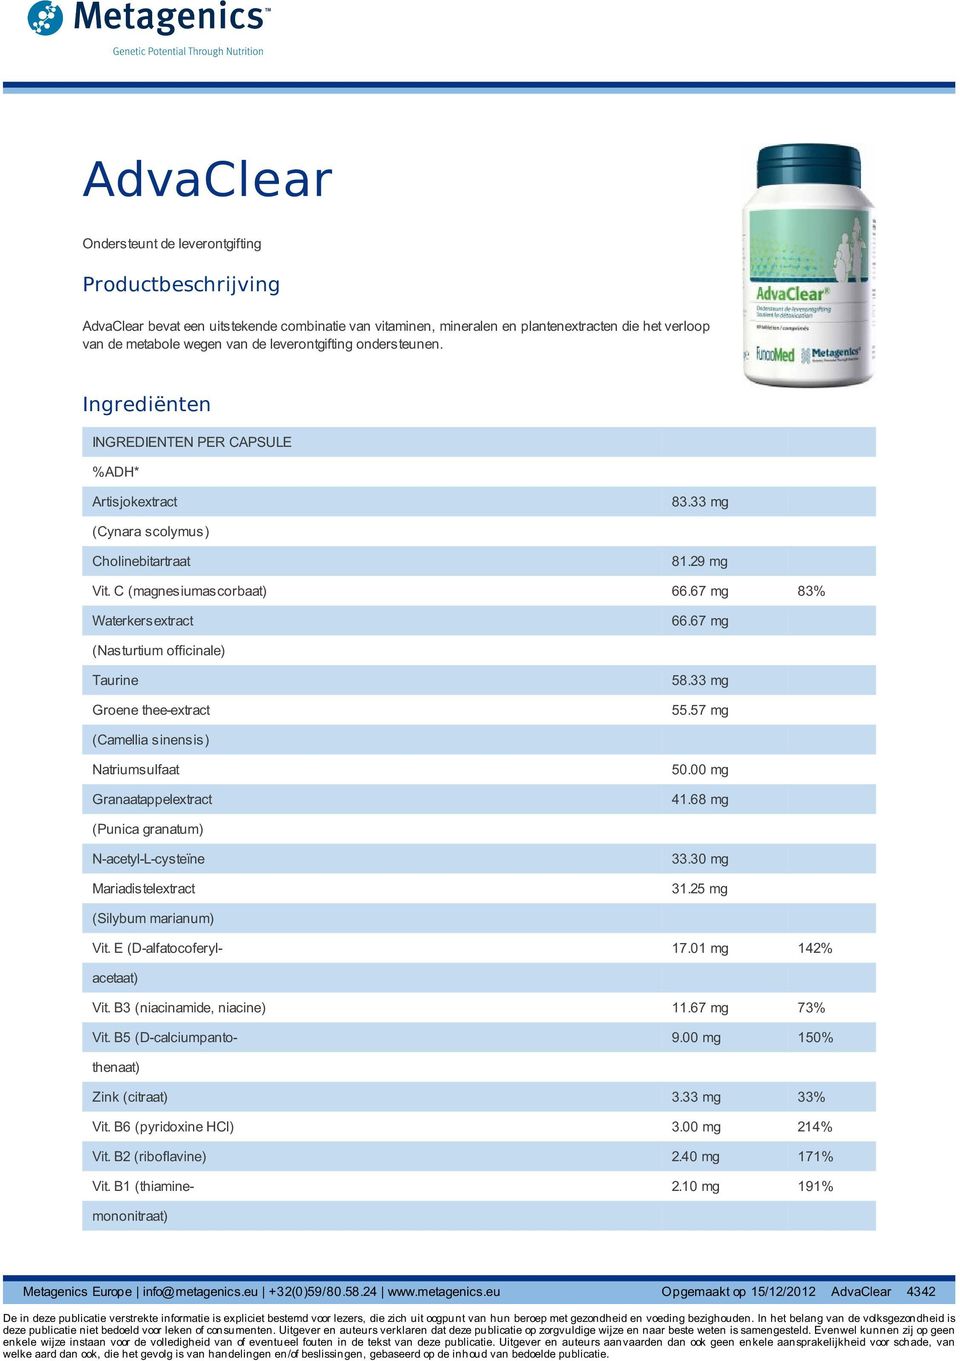 67 mg (Nasturtium officinale) Taurine Groene thee-extract 58.33 mg 55.57 mg (Camellia sinensis) Natriumsulfaat Granaatappelextract 50.00 mg 41.